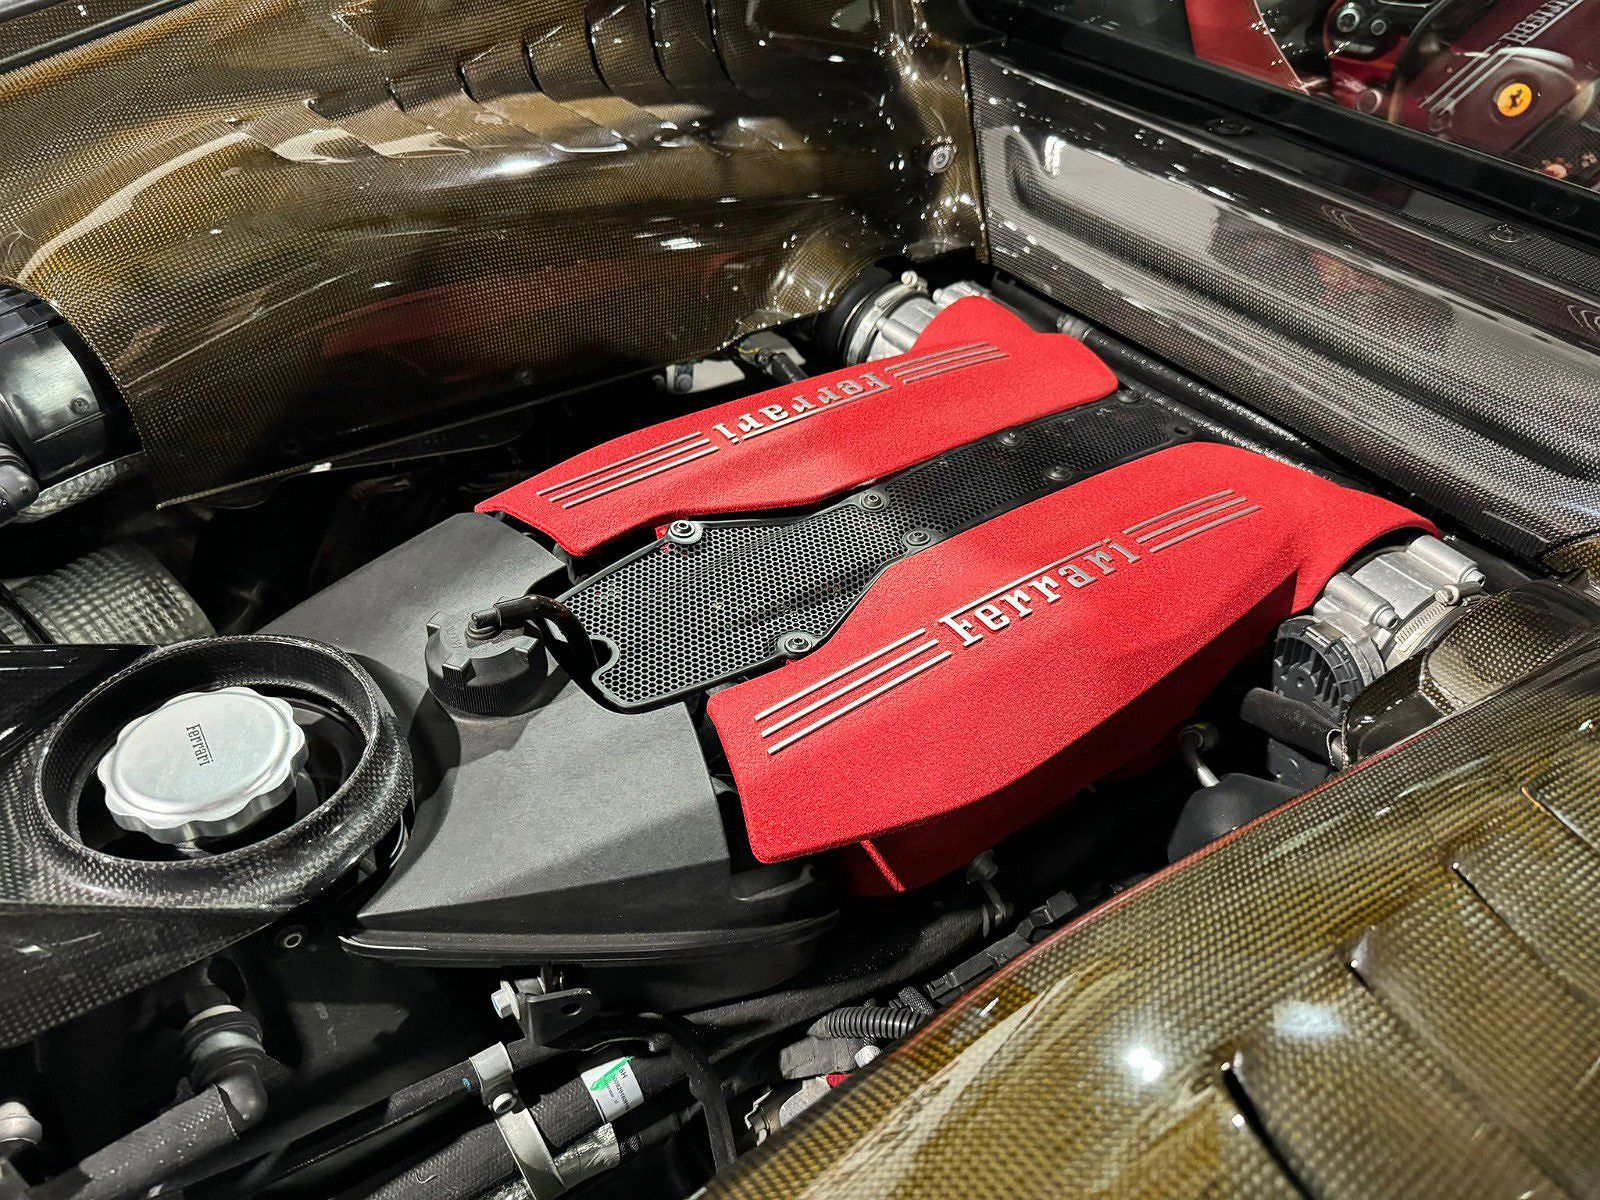 2017 Ferrari 488 GTB image 41